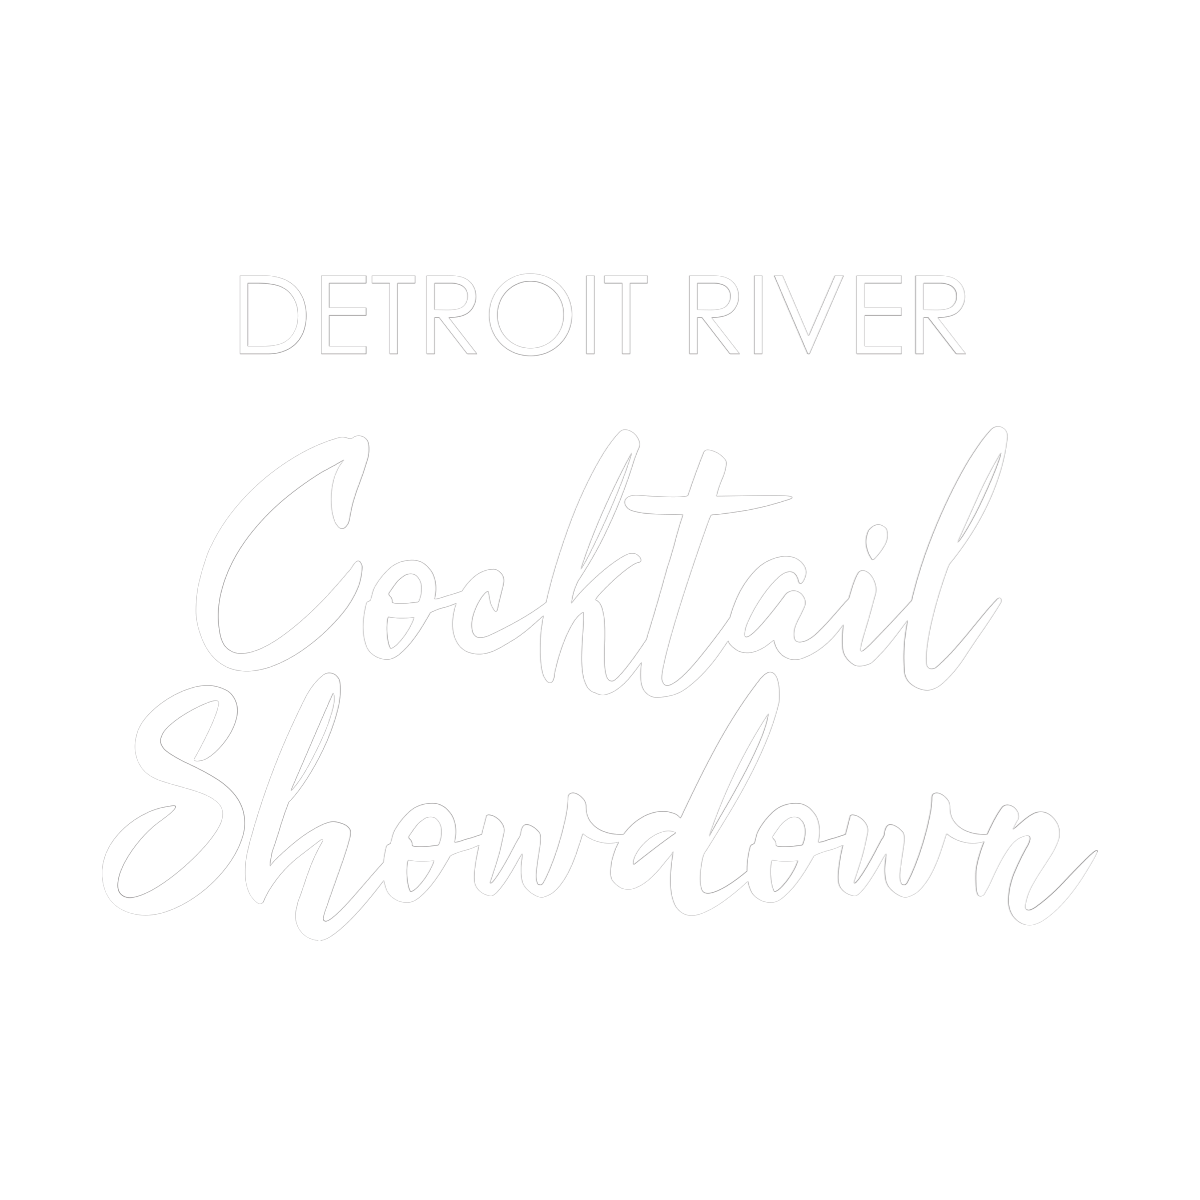 Detroit River Cocktail Showdown logo